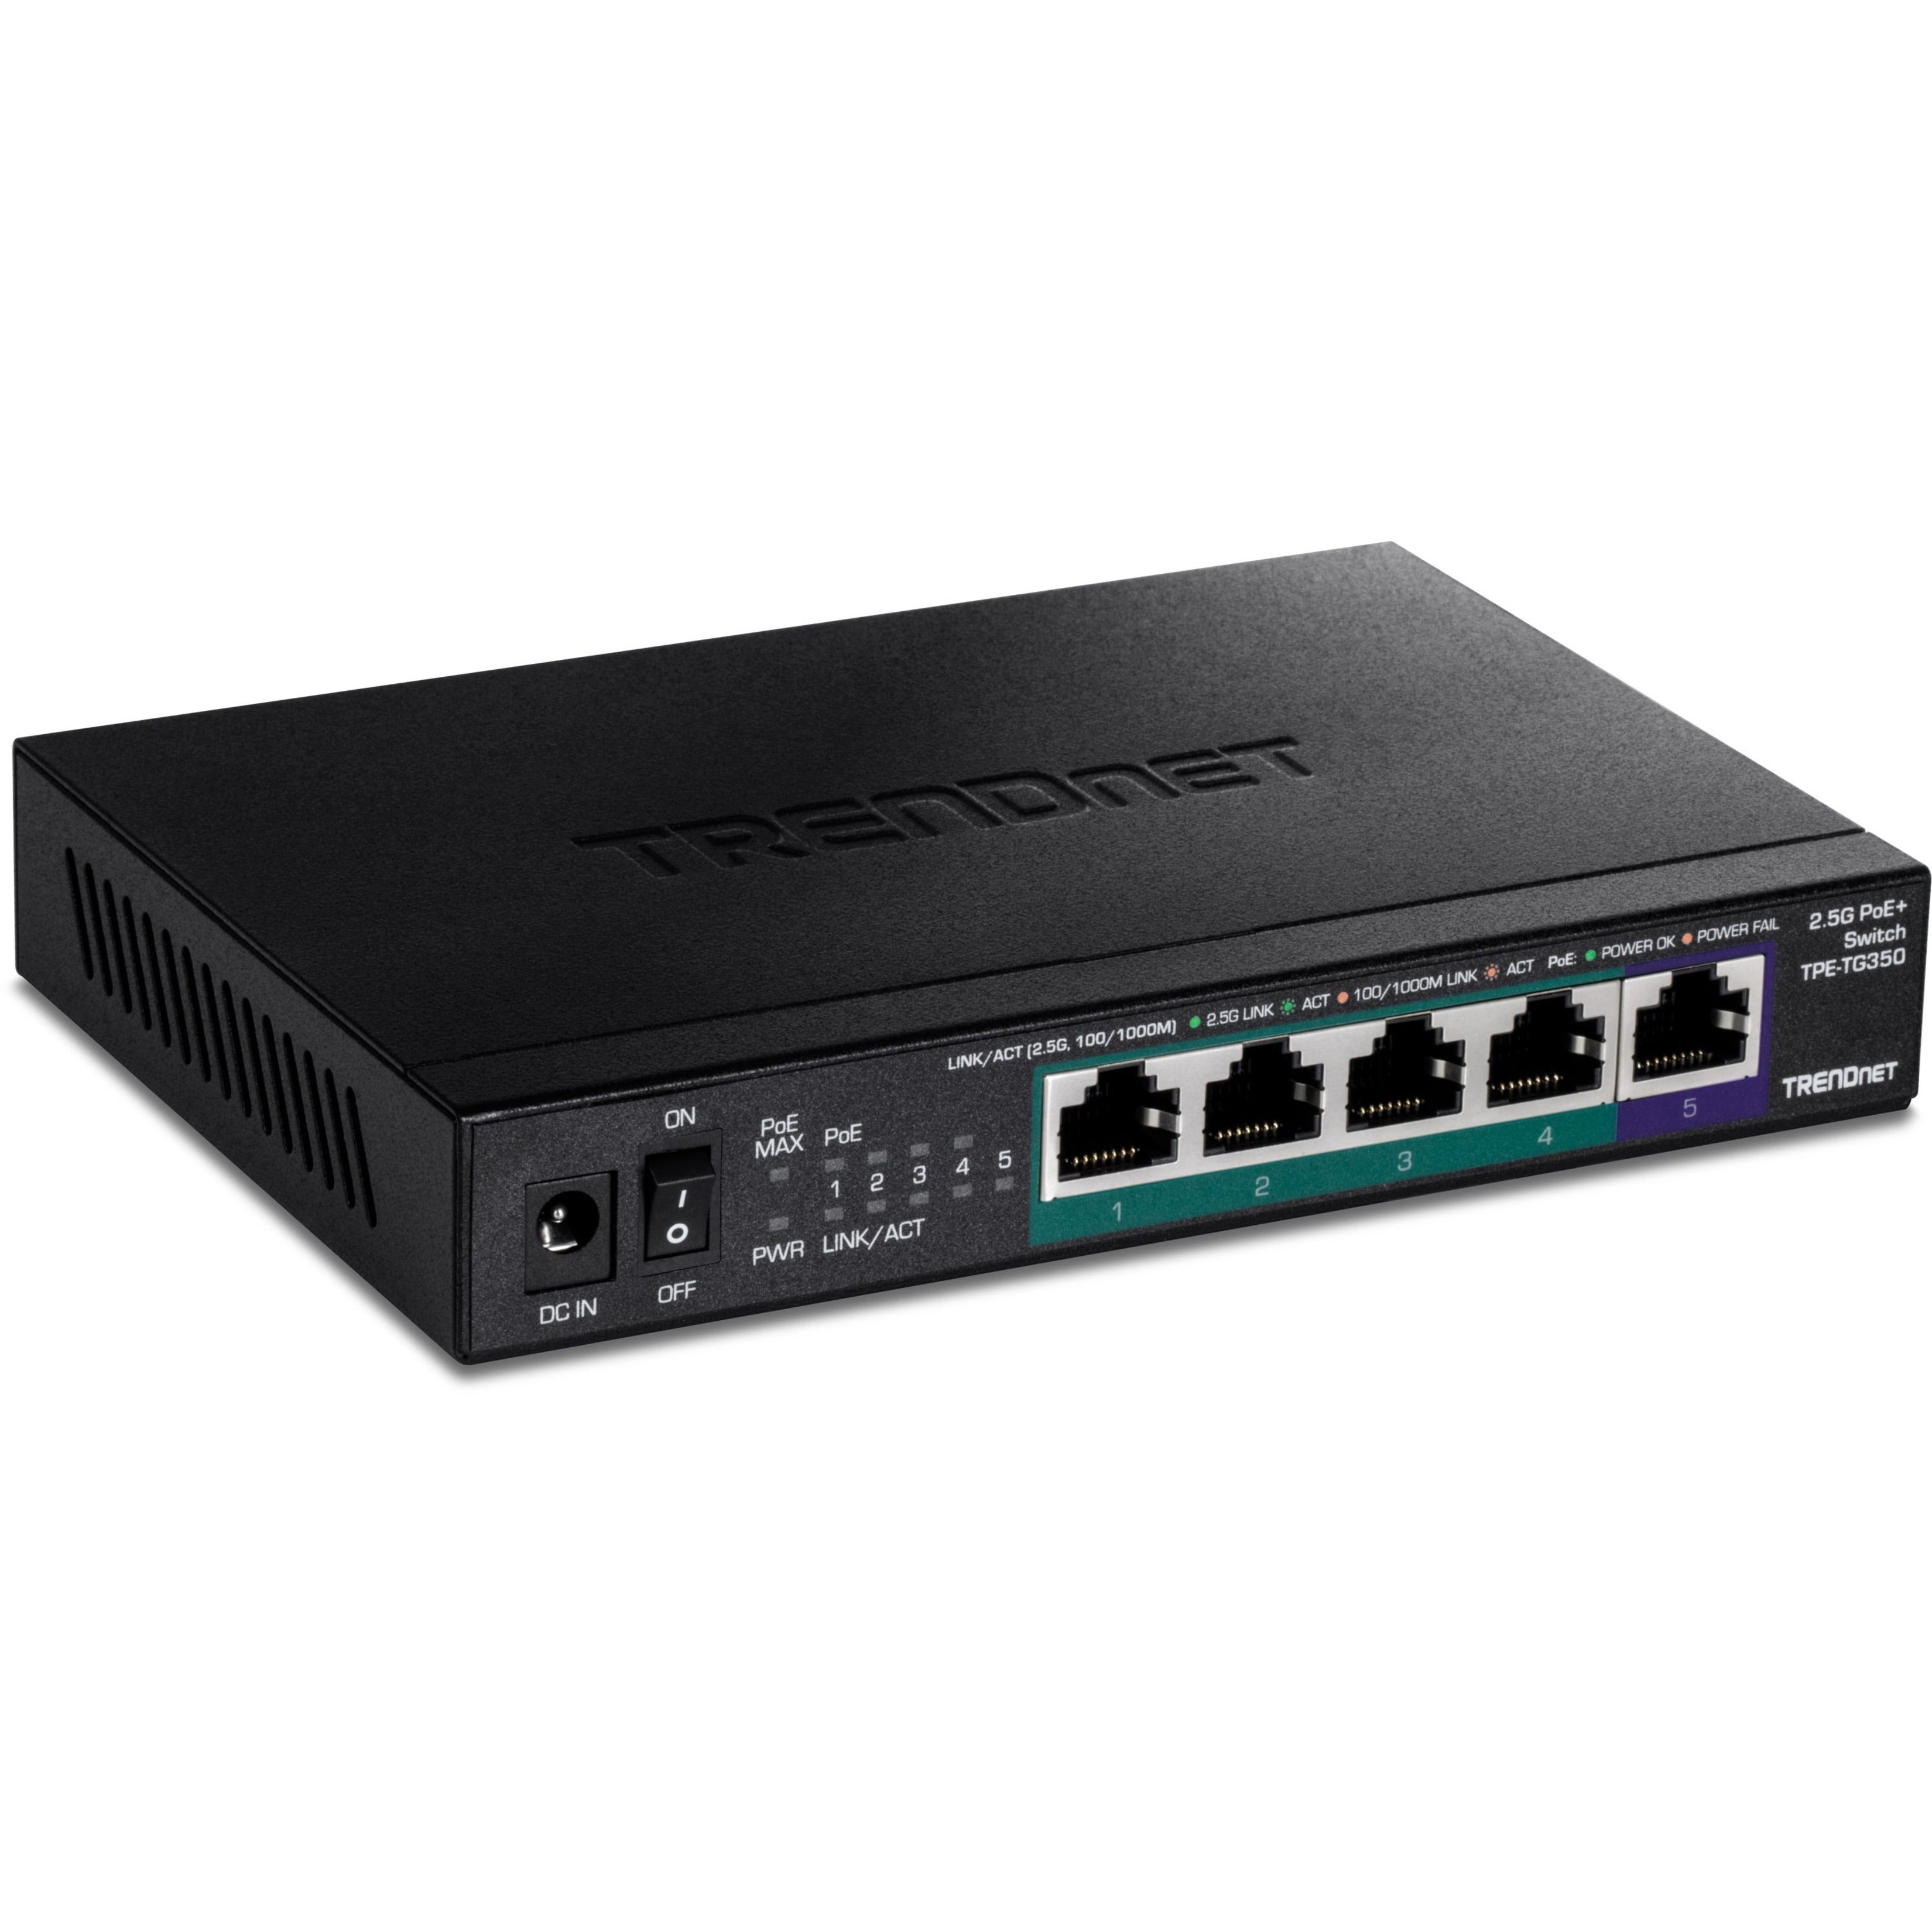 TRENDnet TPE-TG350 5-Port Unmanaged 2.5G PoE+ Switch, Gigabit Ethernet Network, TAA Compliant